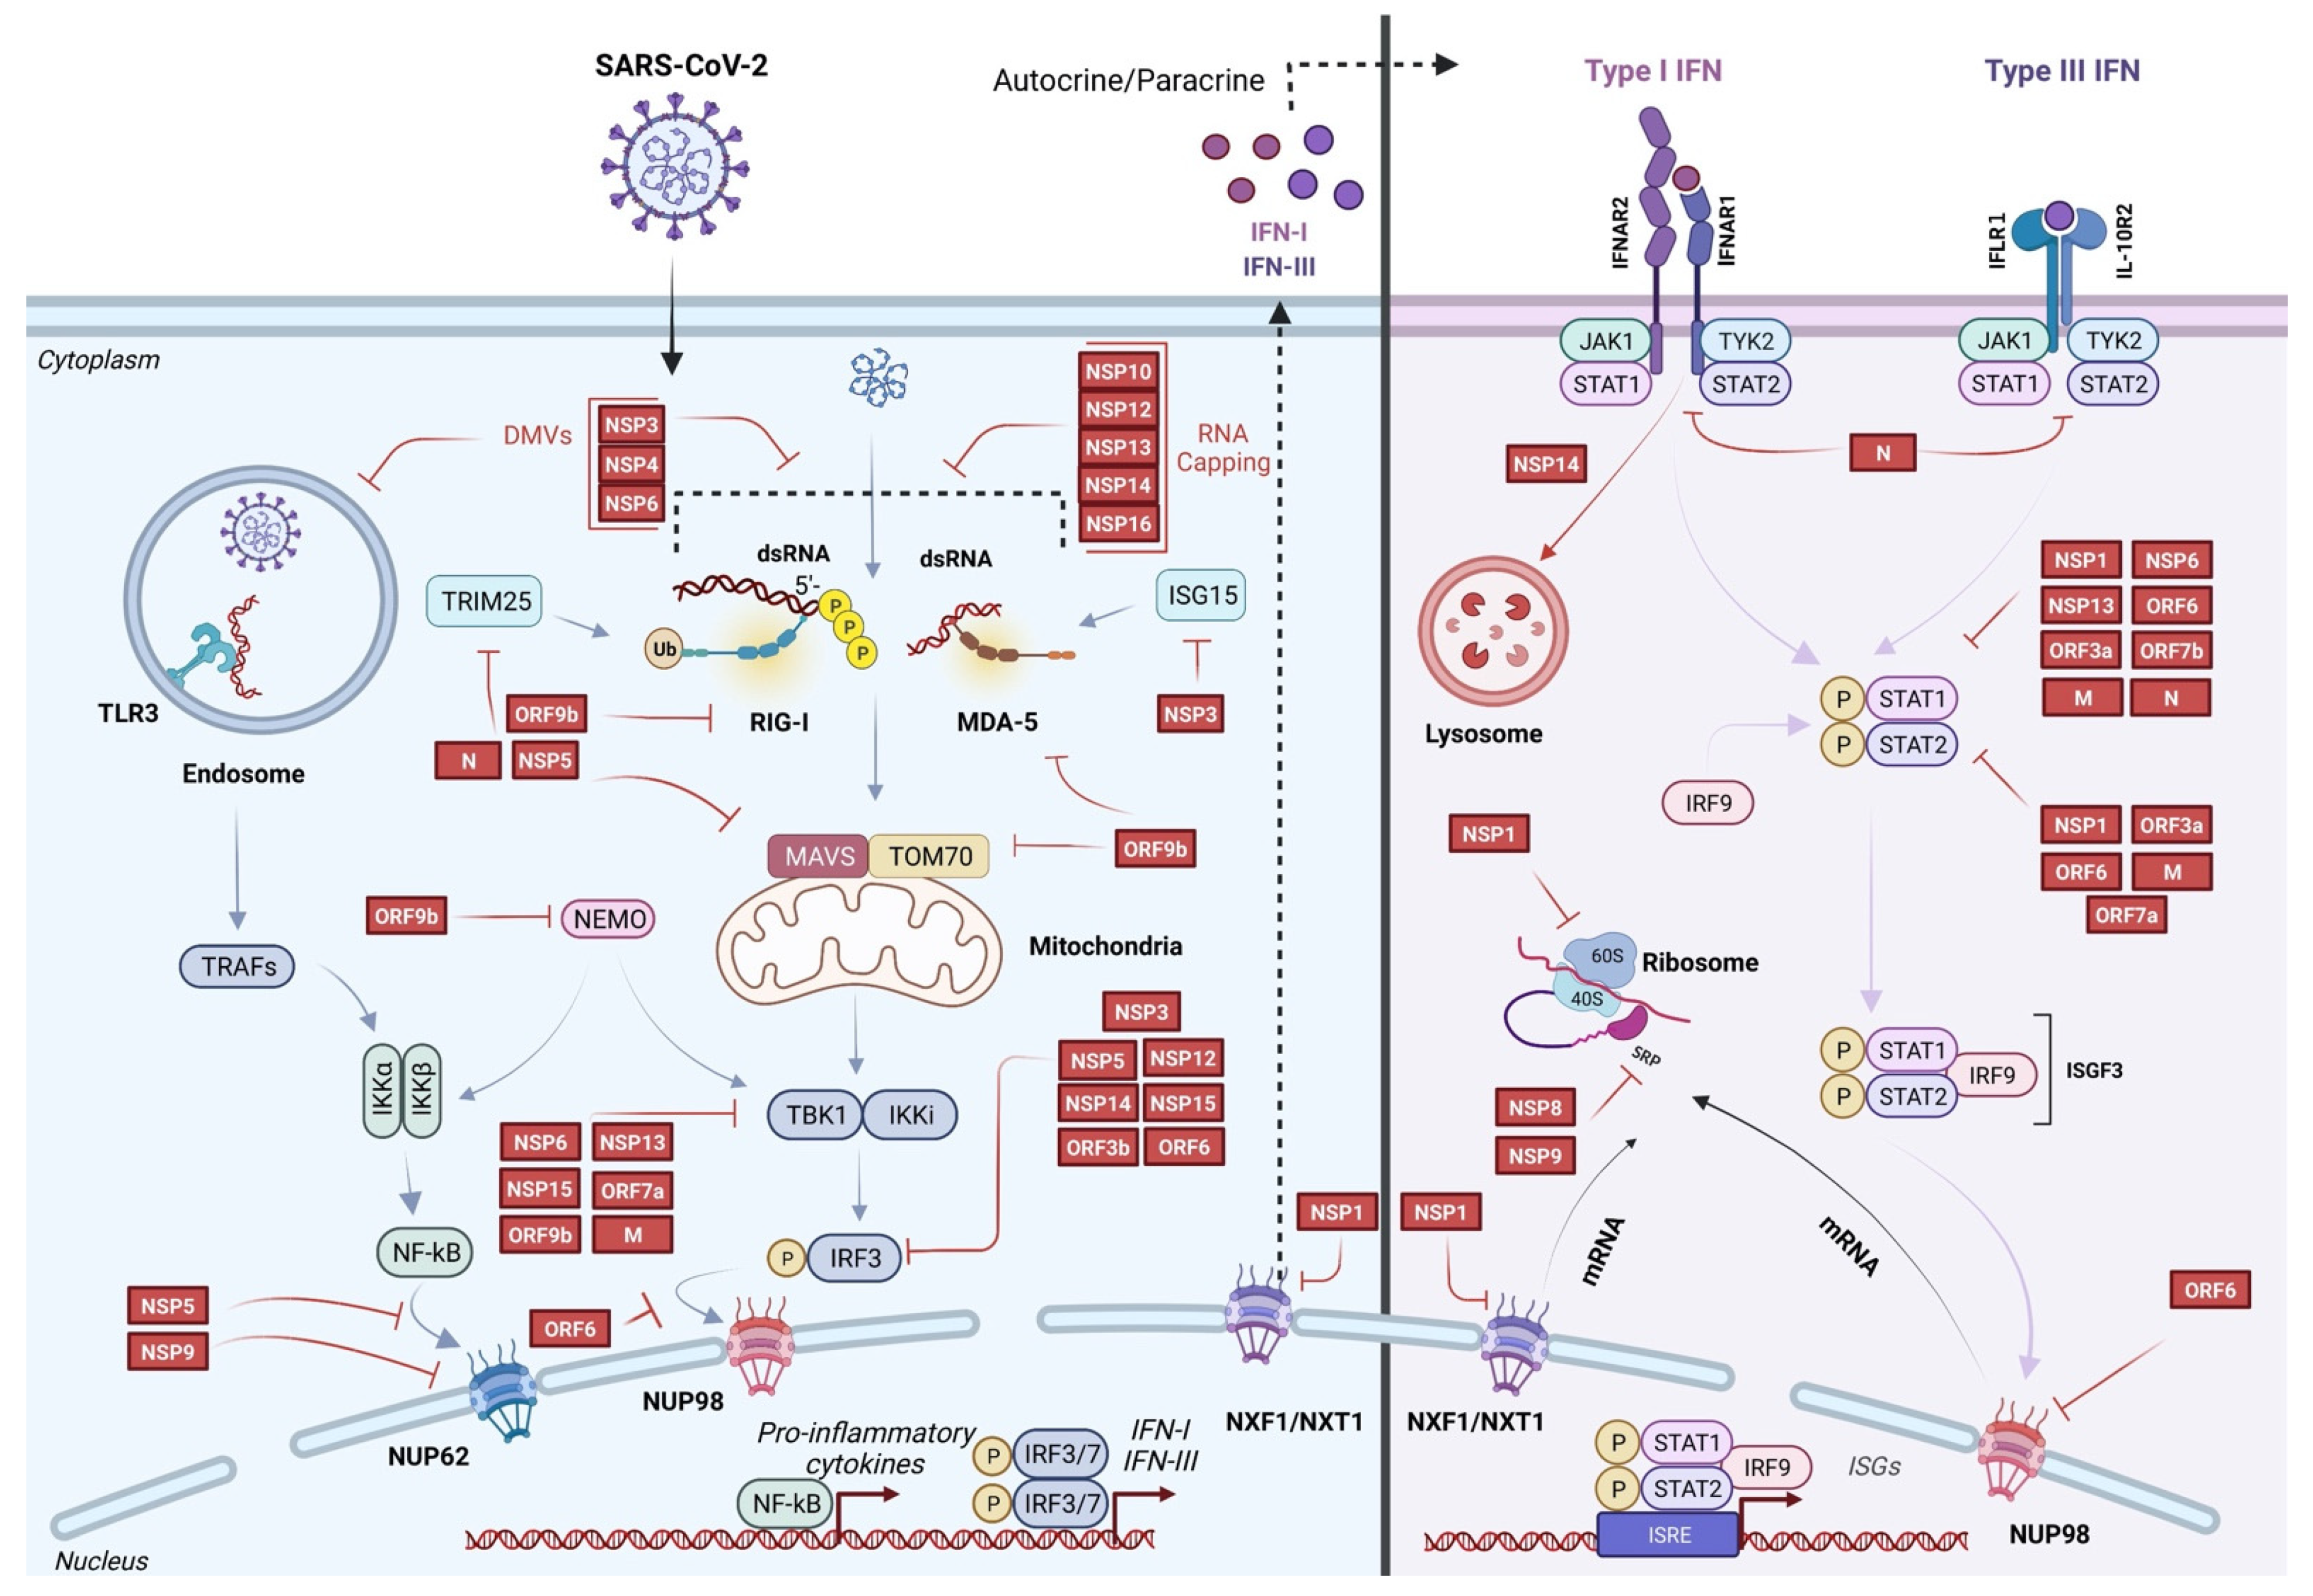 How SARS-CoV-2 evades the immune system